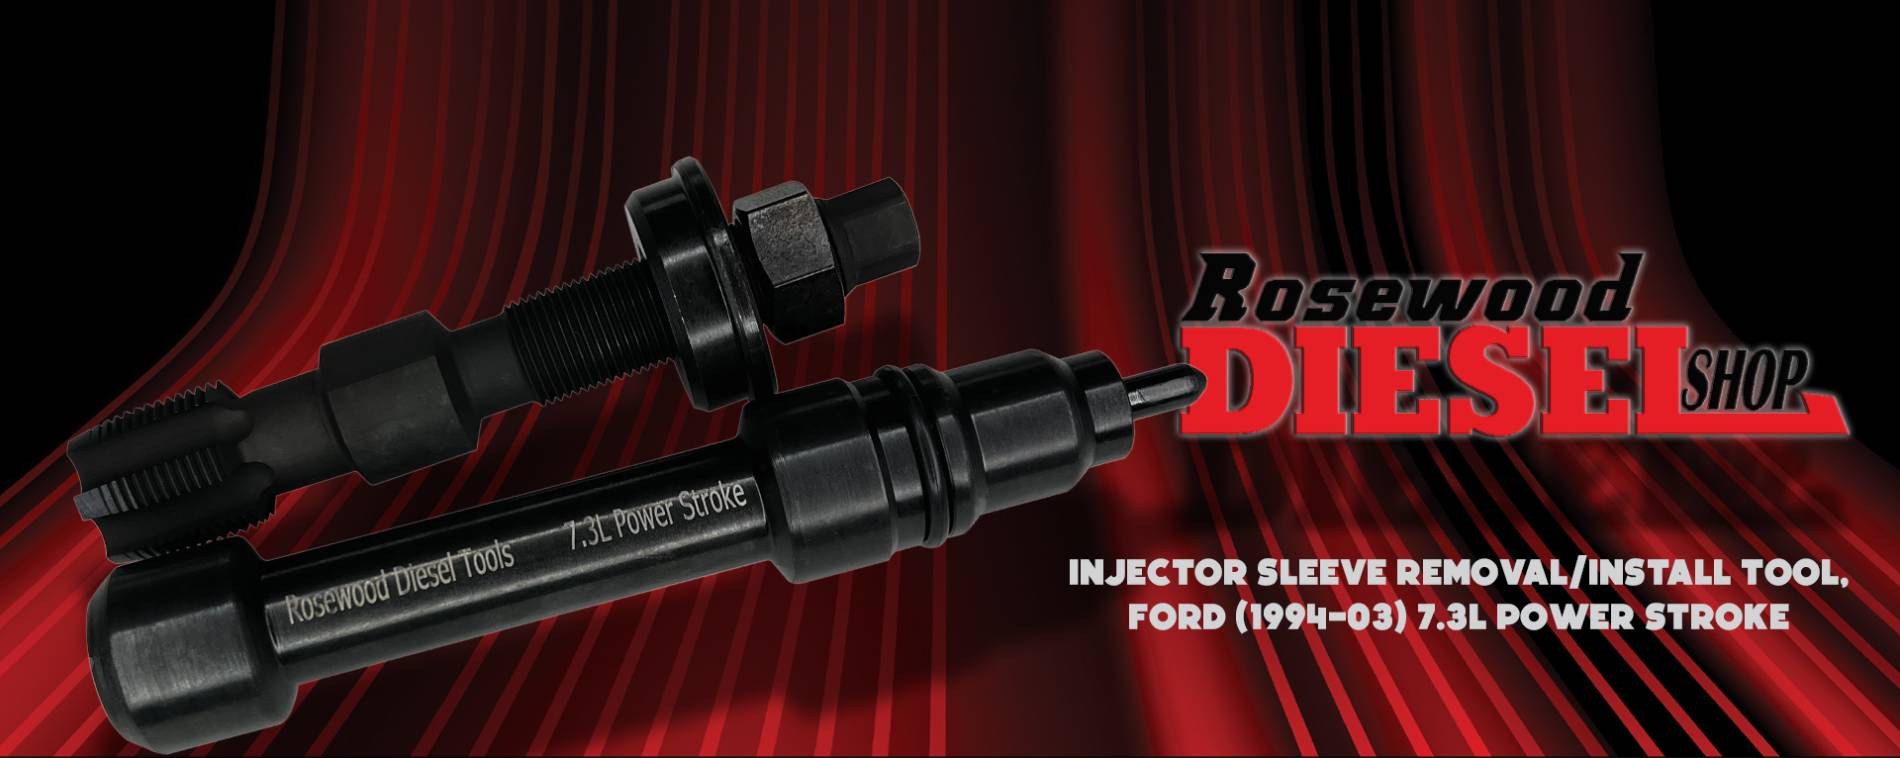 Rosewood Diesel Injector Sleeve Removal/Install Tool